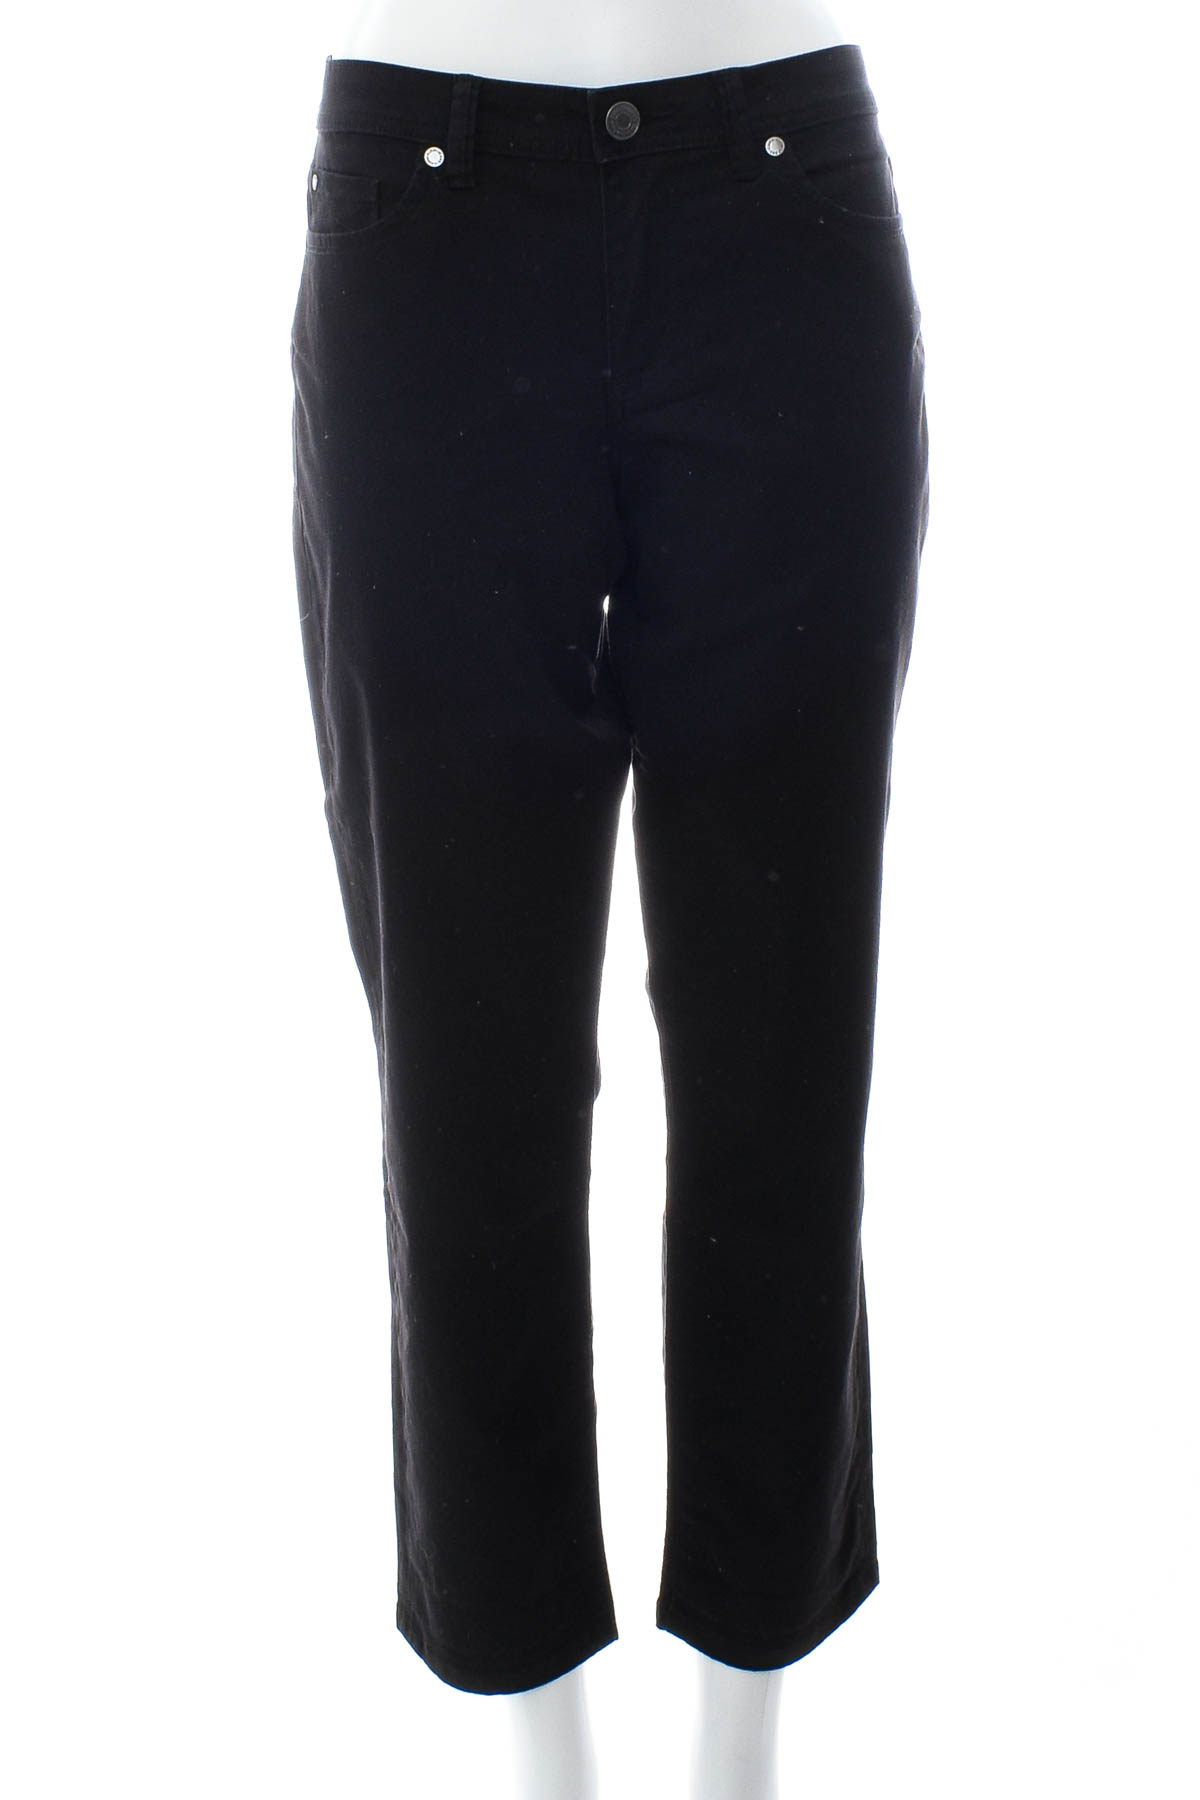 Women's trousers - Calvin Klein Jeans - 0